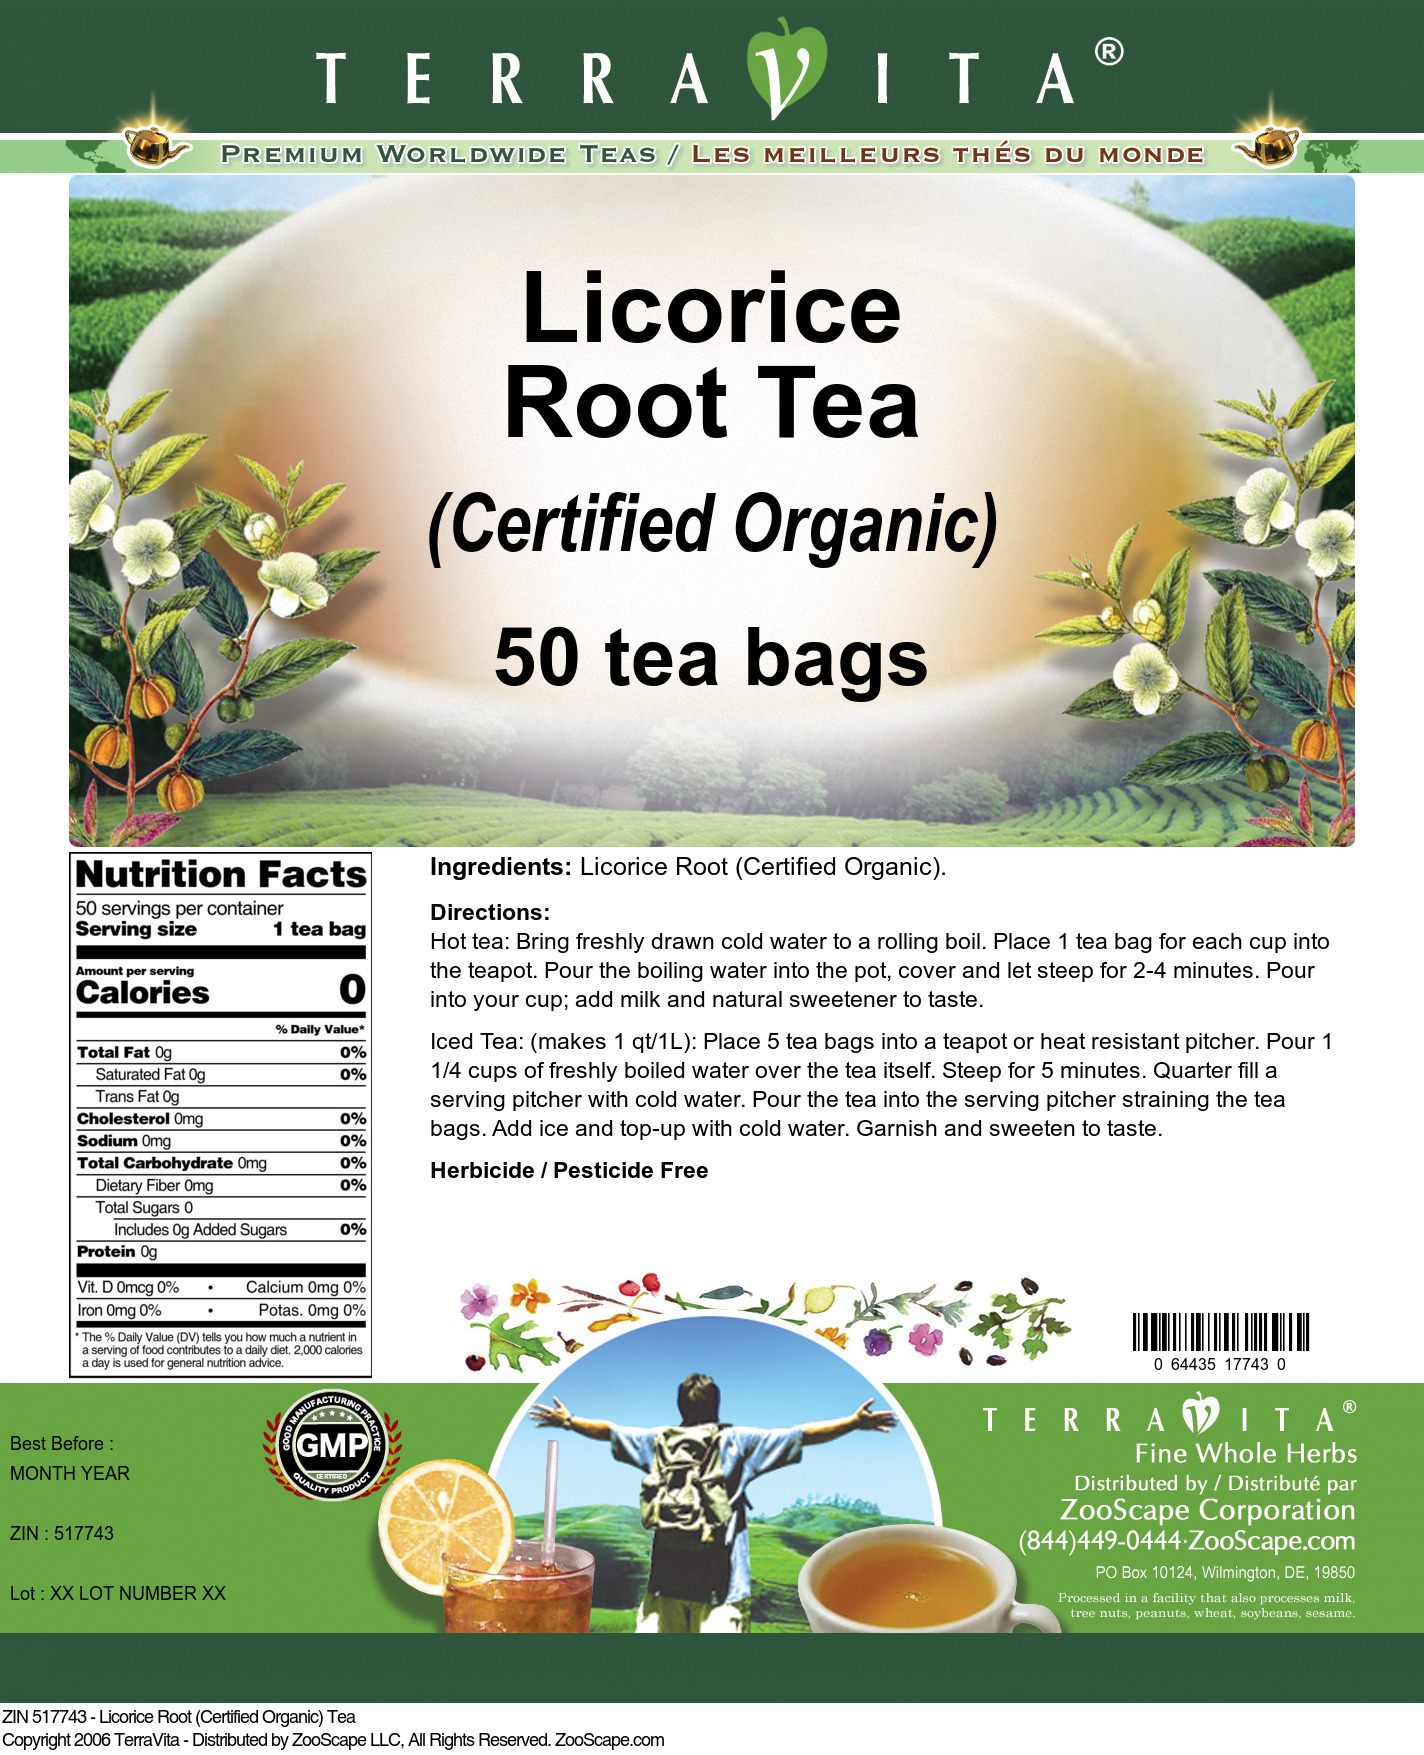 Licorice Root (Certified Organic) Tea - Label